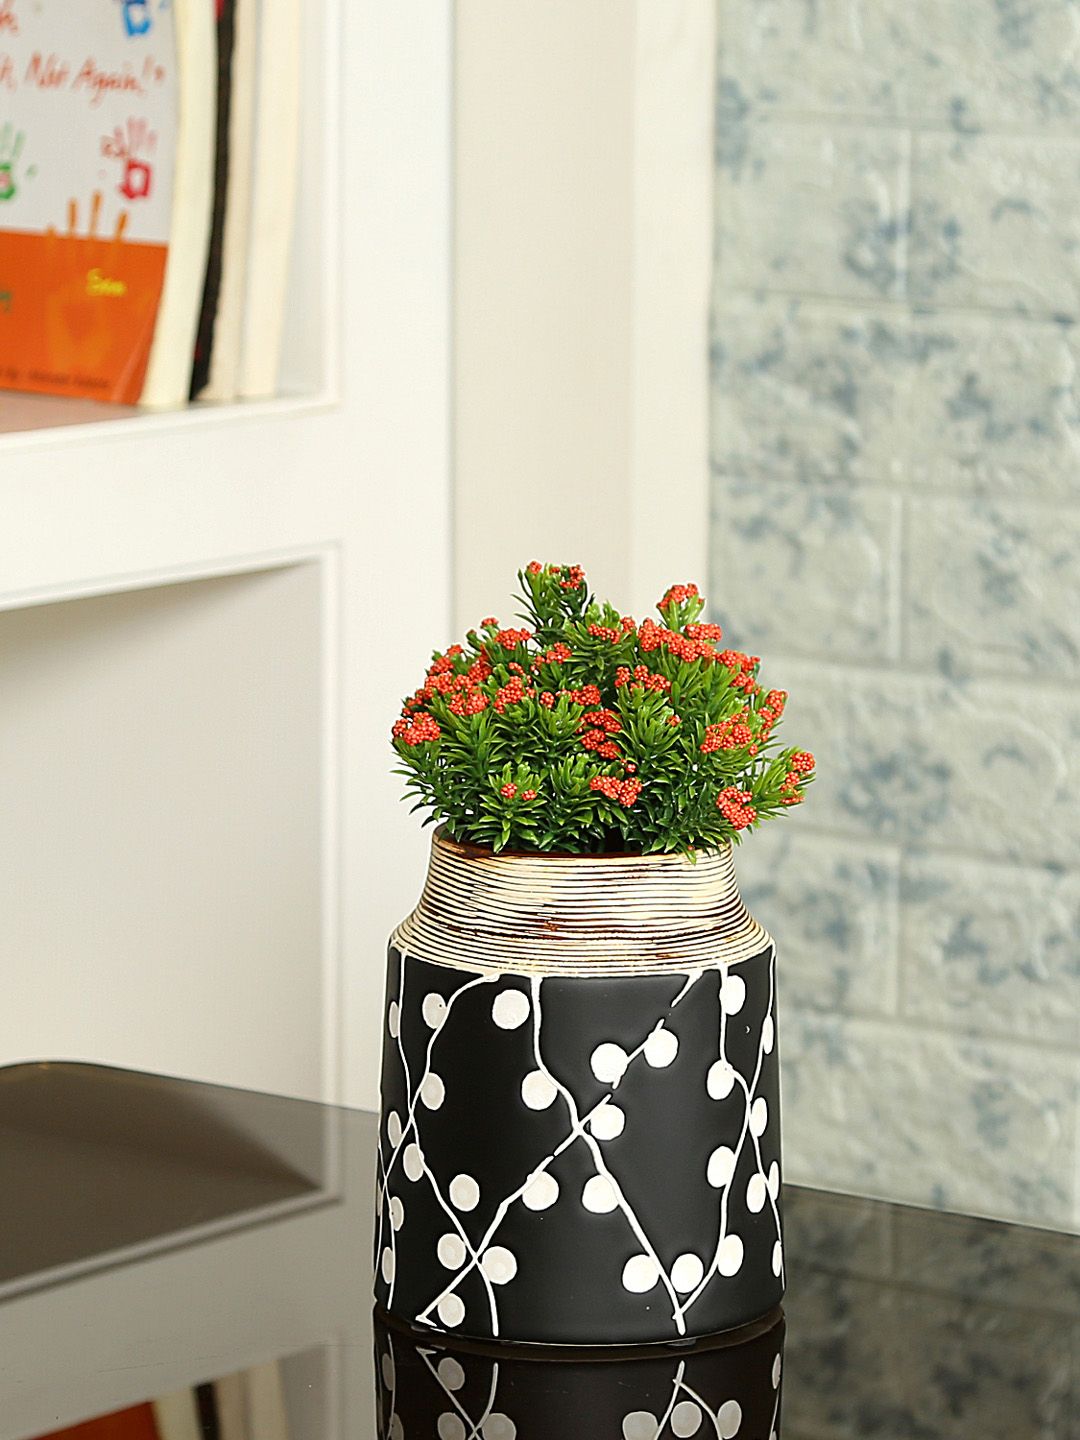 Aapno Rajasthan Black Ceramic Flower Vase Price in India